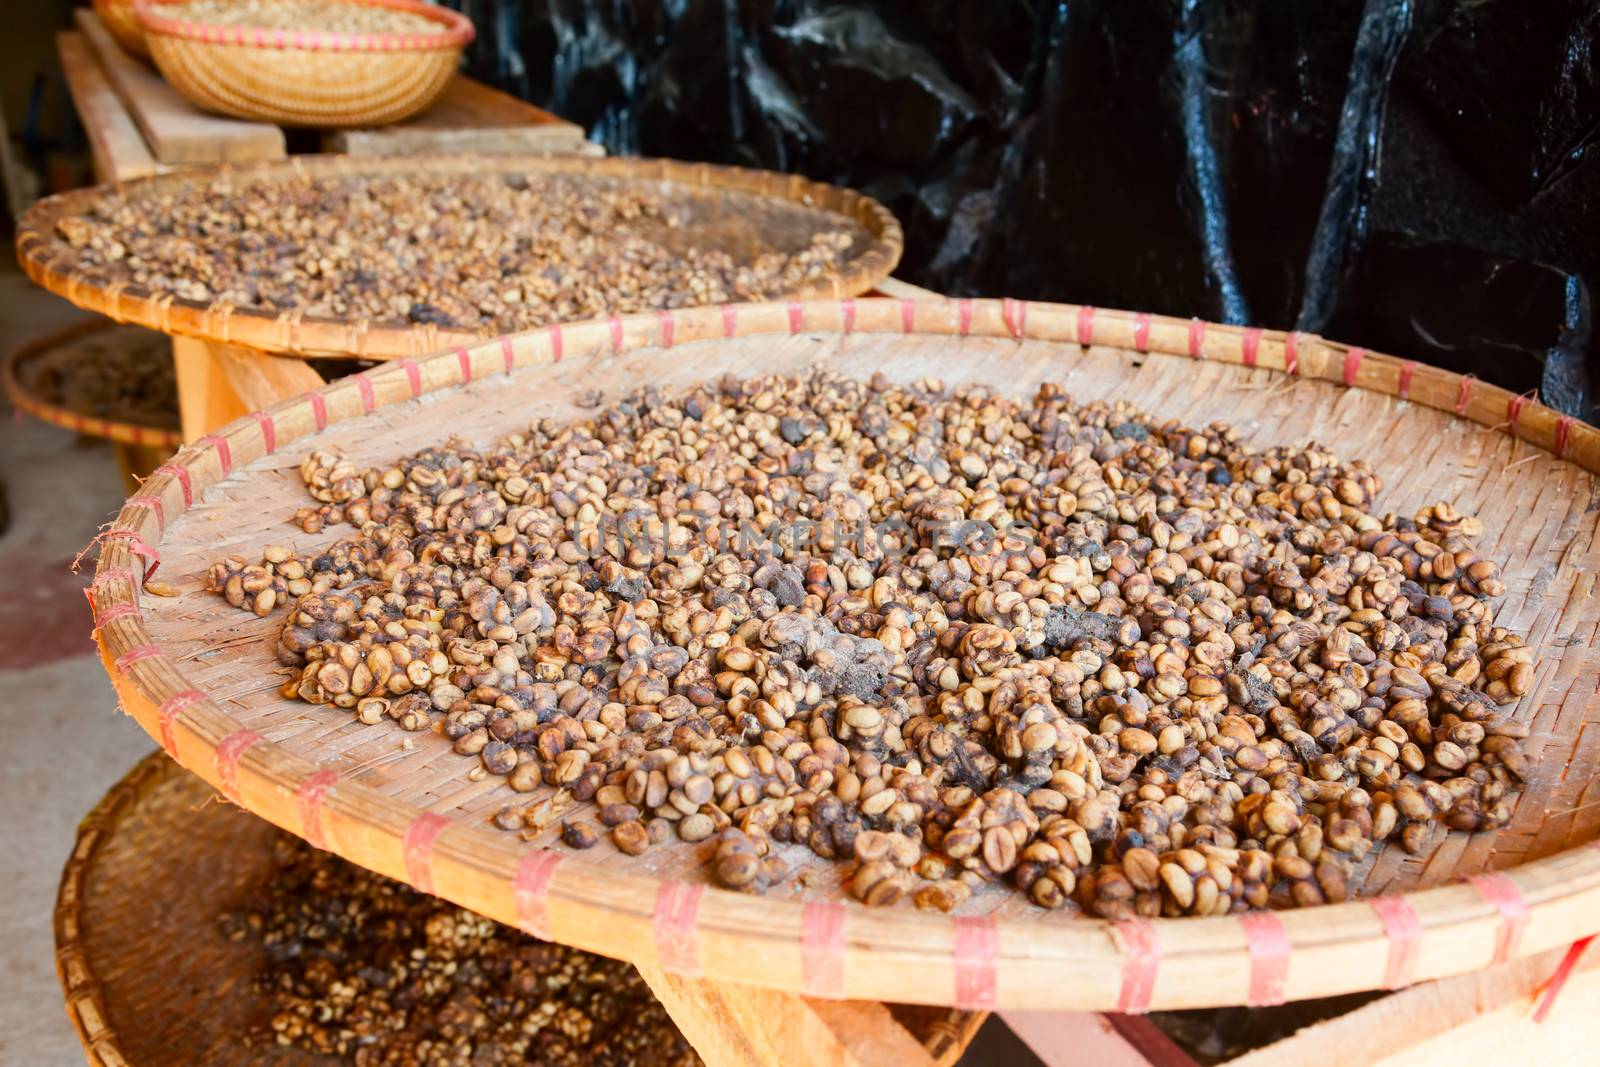 Civet feces with embedded coffee beans - Weasel coffee (Kopi Luwak or Civet coffee)